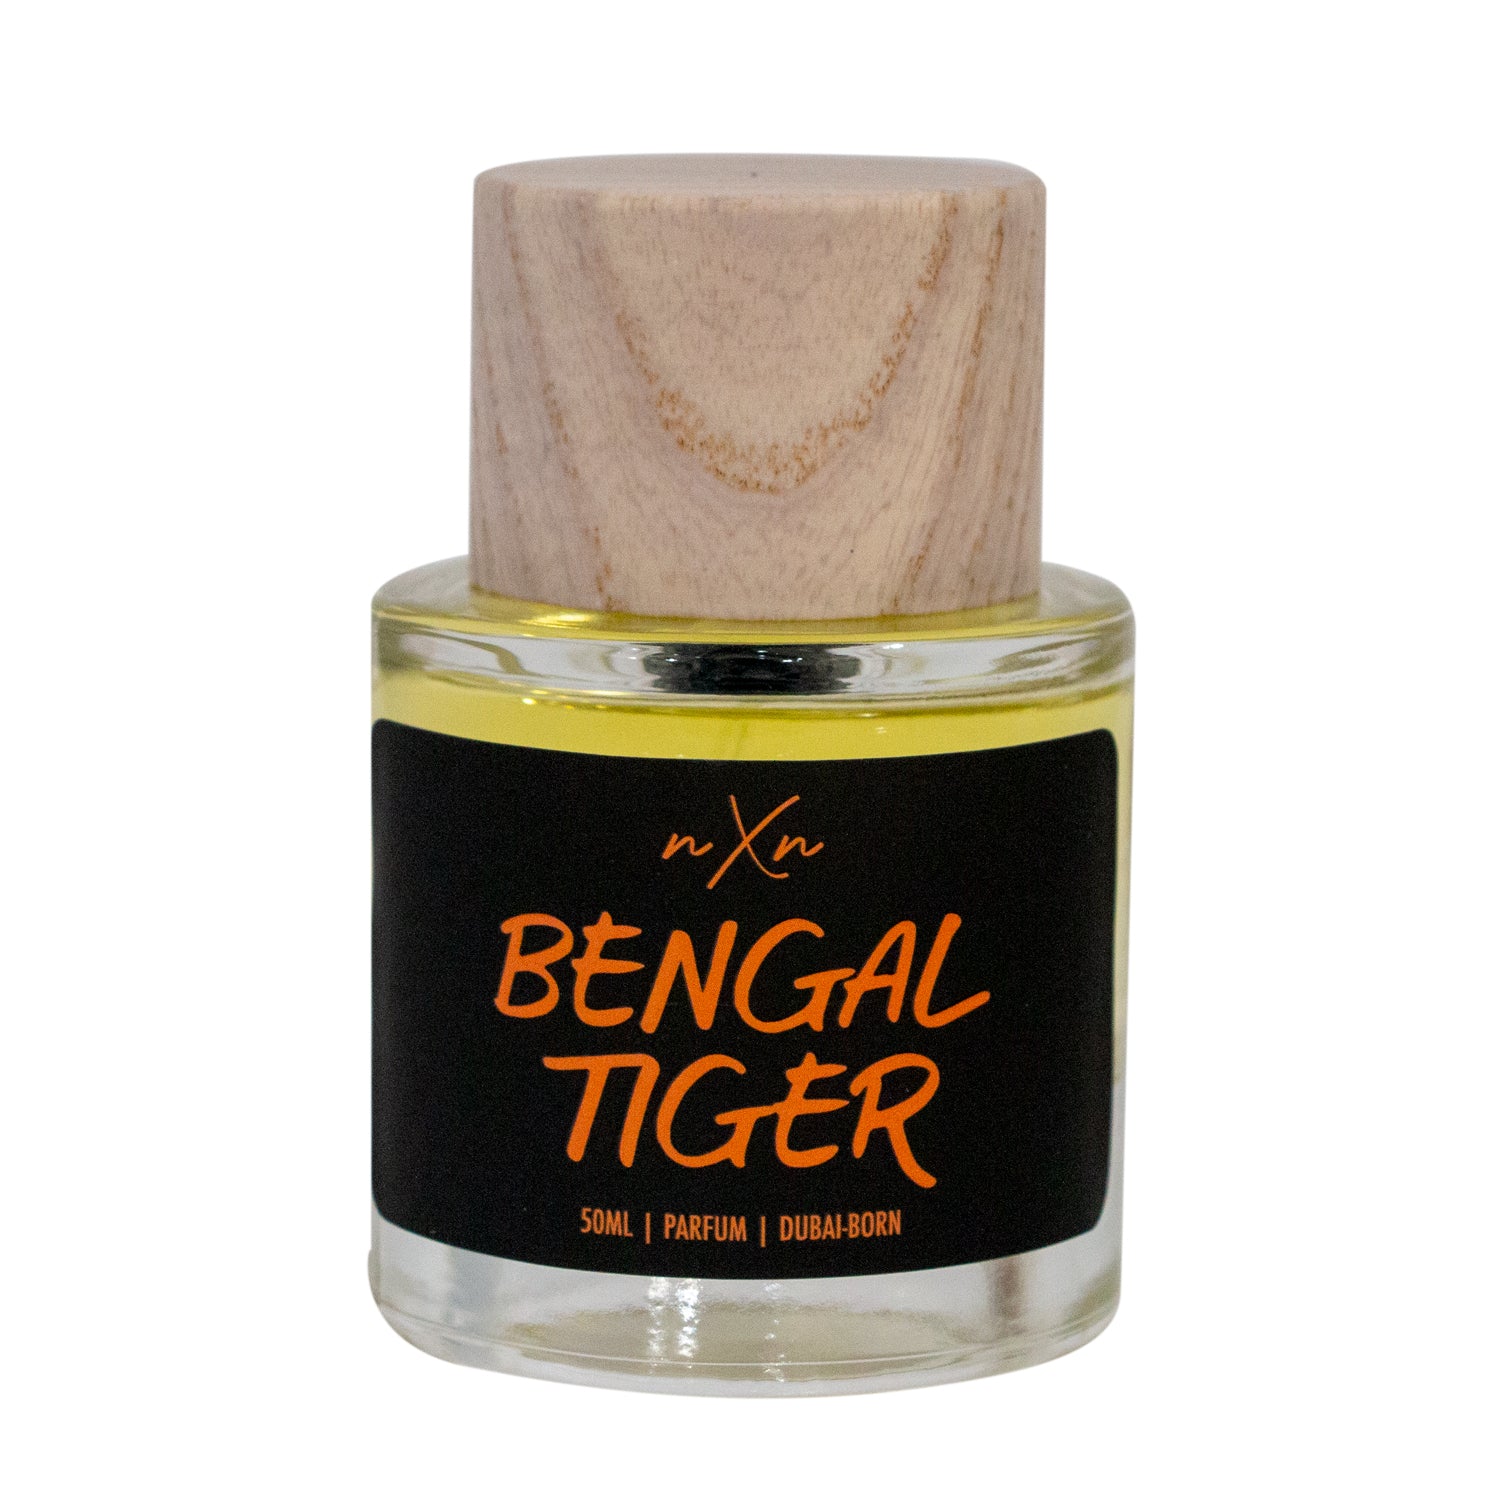 BENGAL TIGER by nXn Perfumes, Parfum, Unisex, 50ml